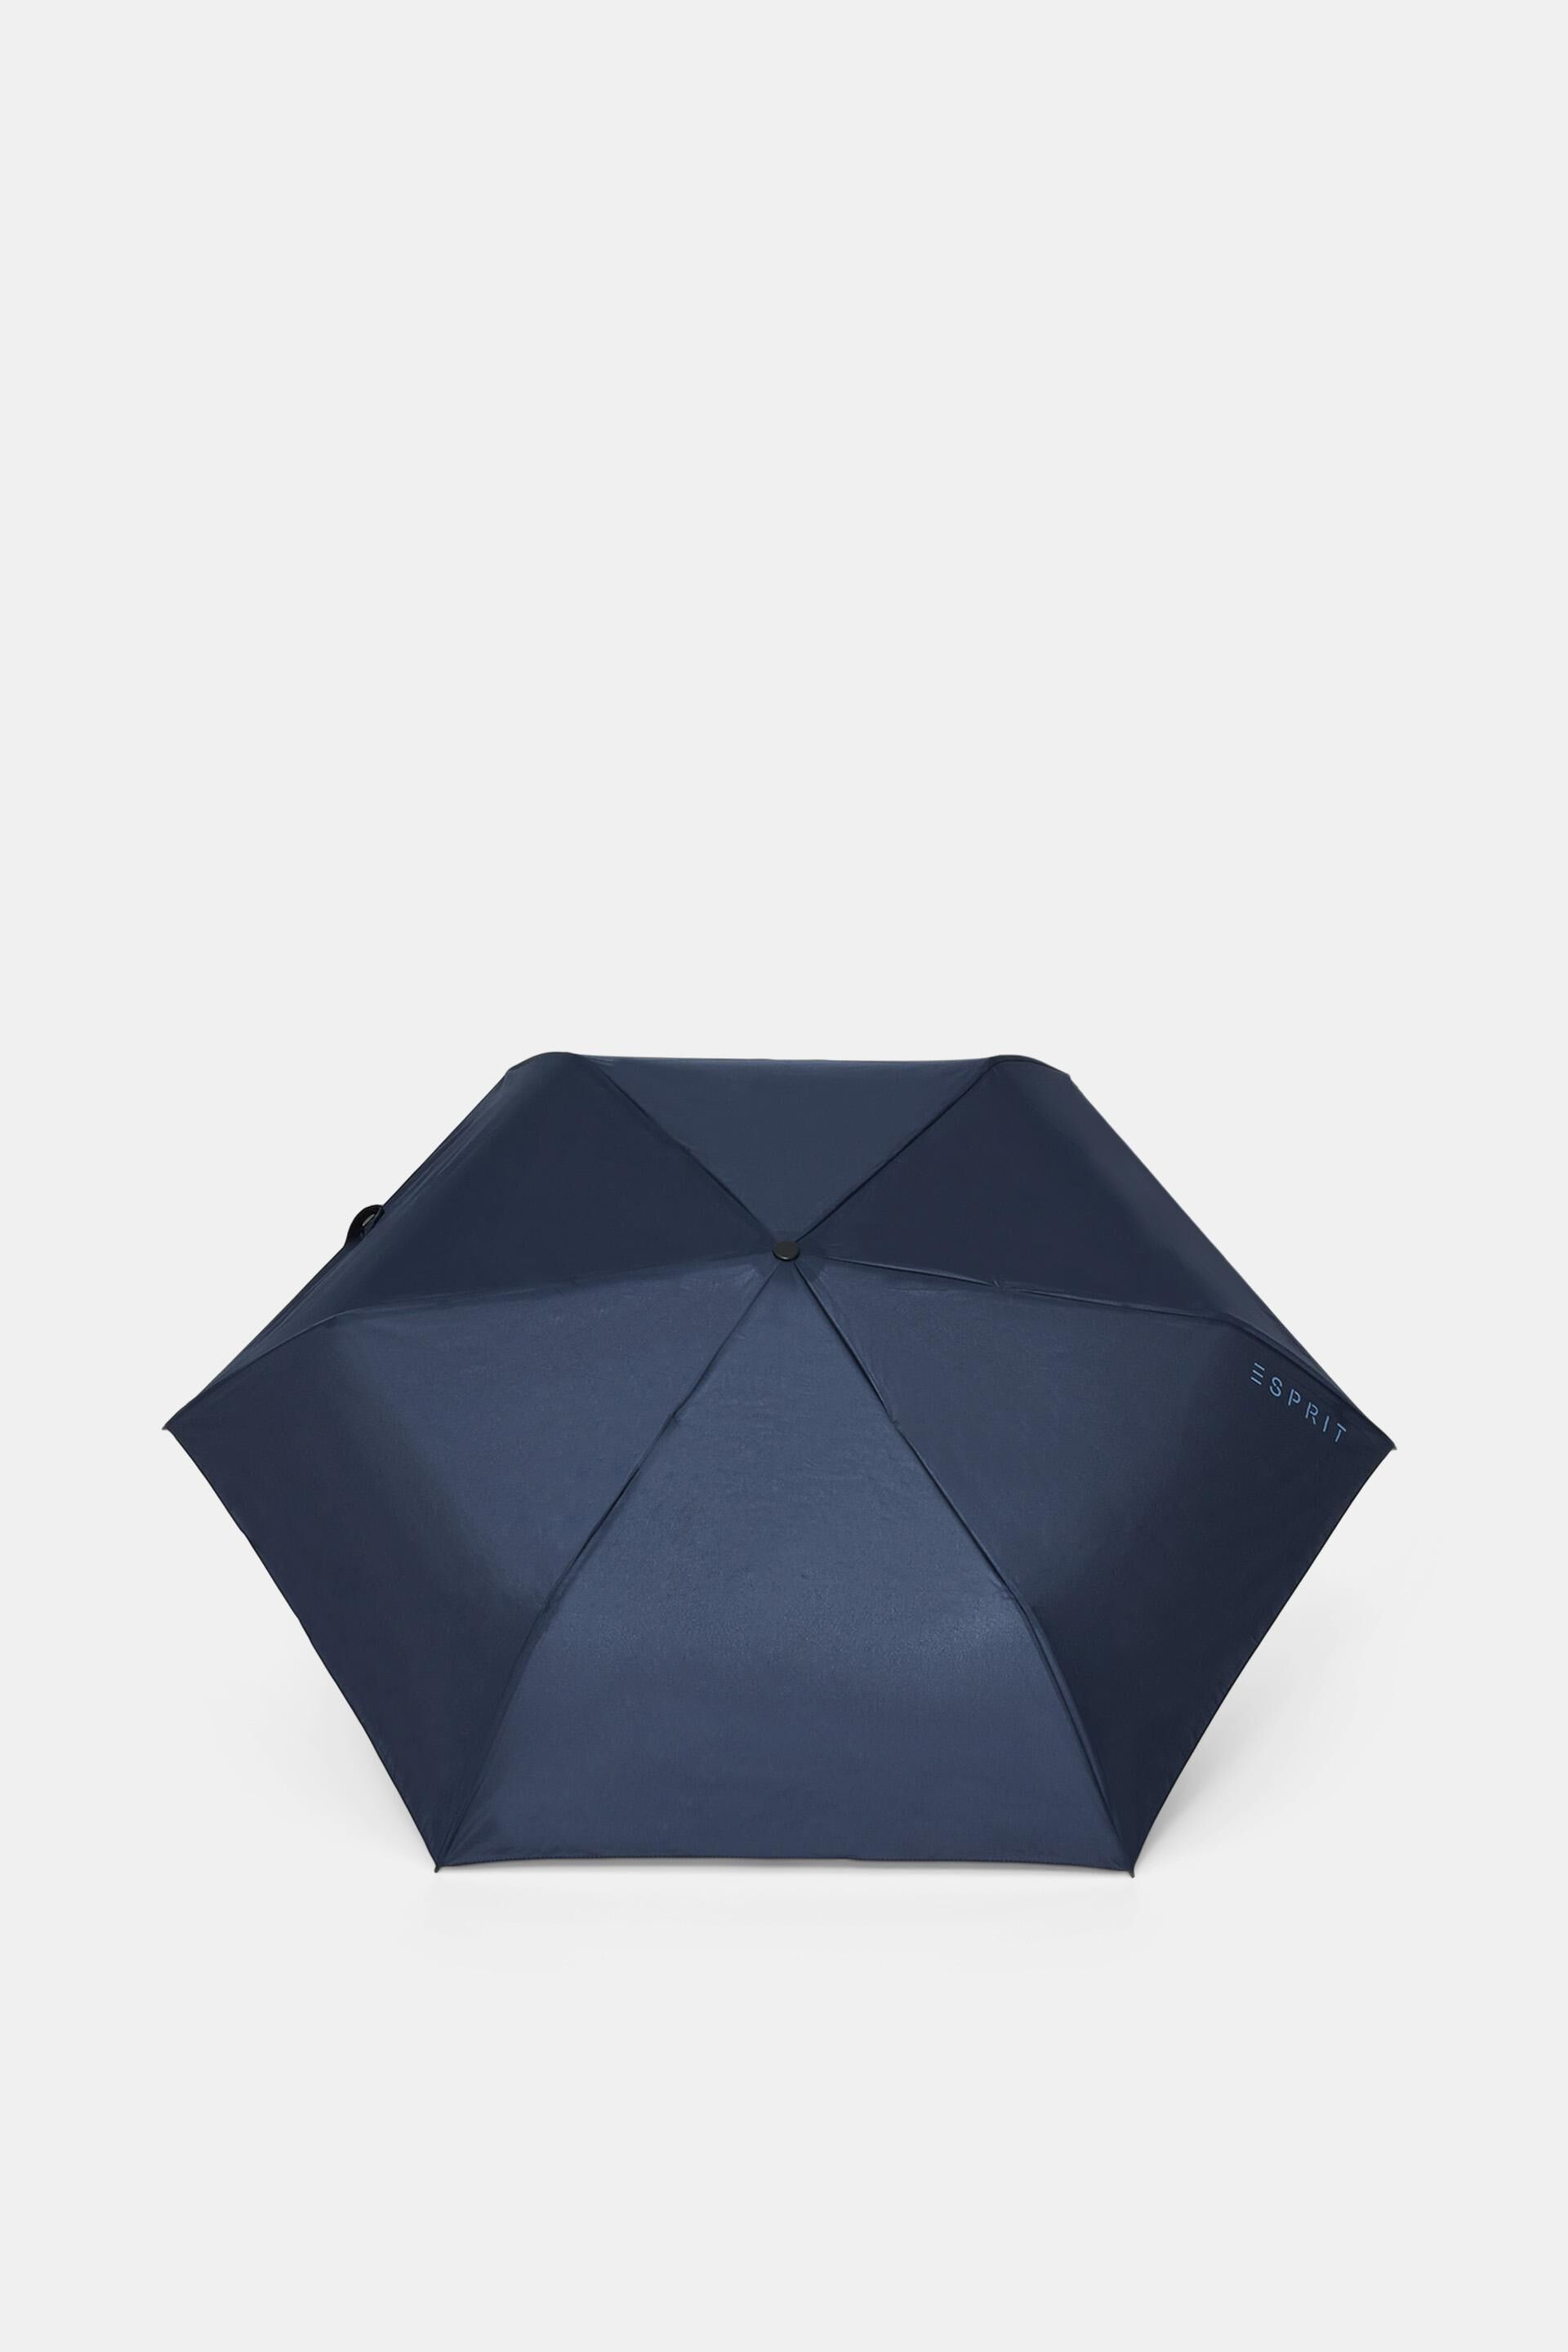 Esprit in umbrella blue pocket slimline Easymatic